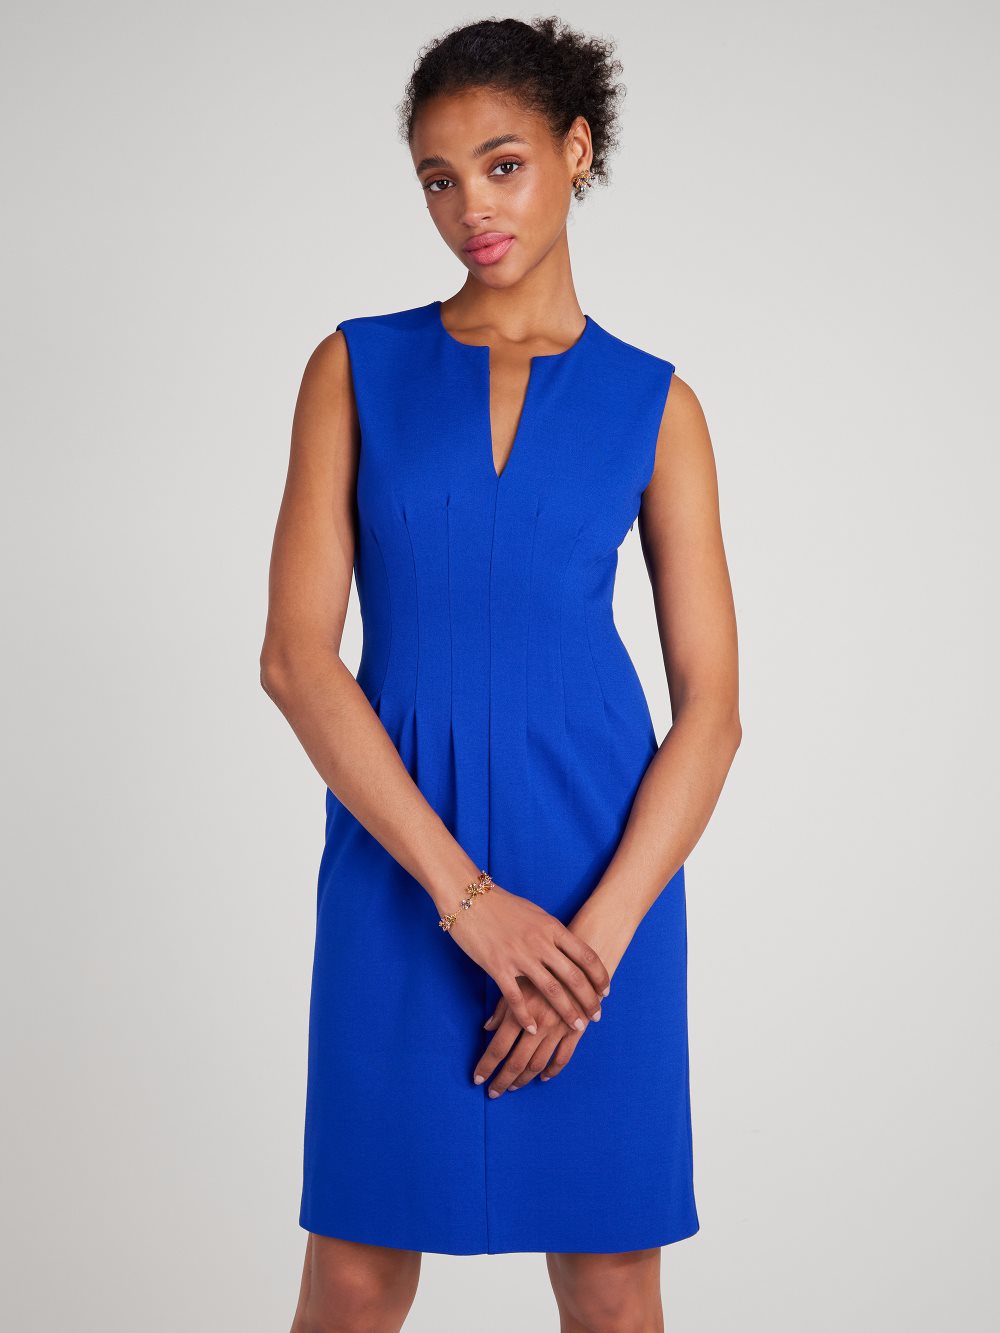 Women's blueberry seamed ponte dress | Kate Spade